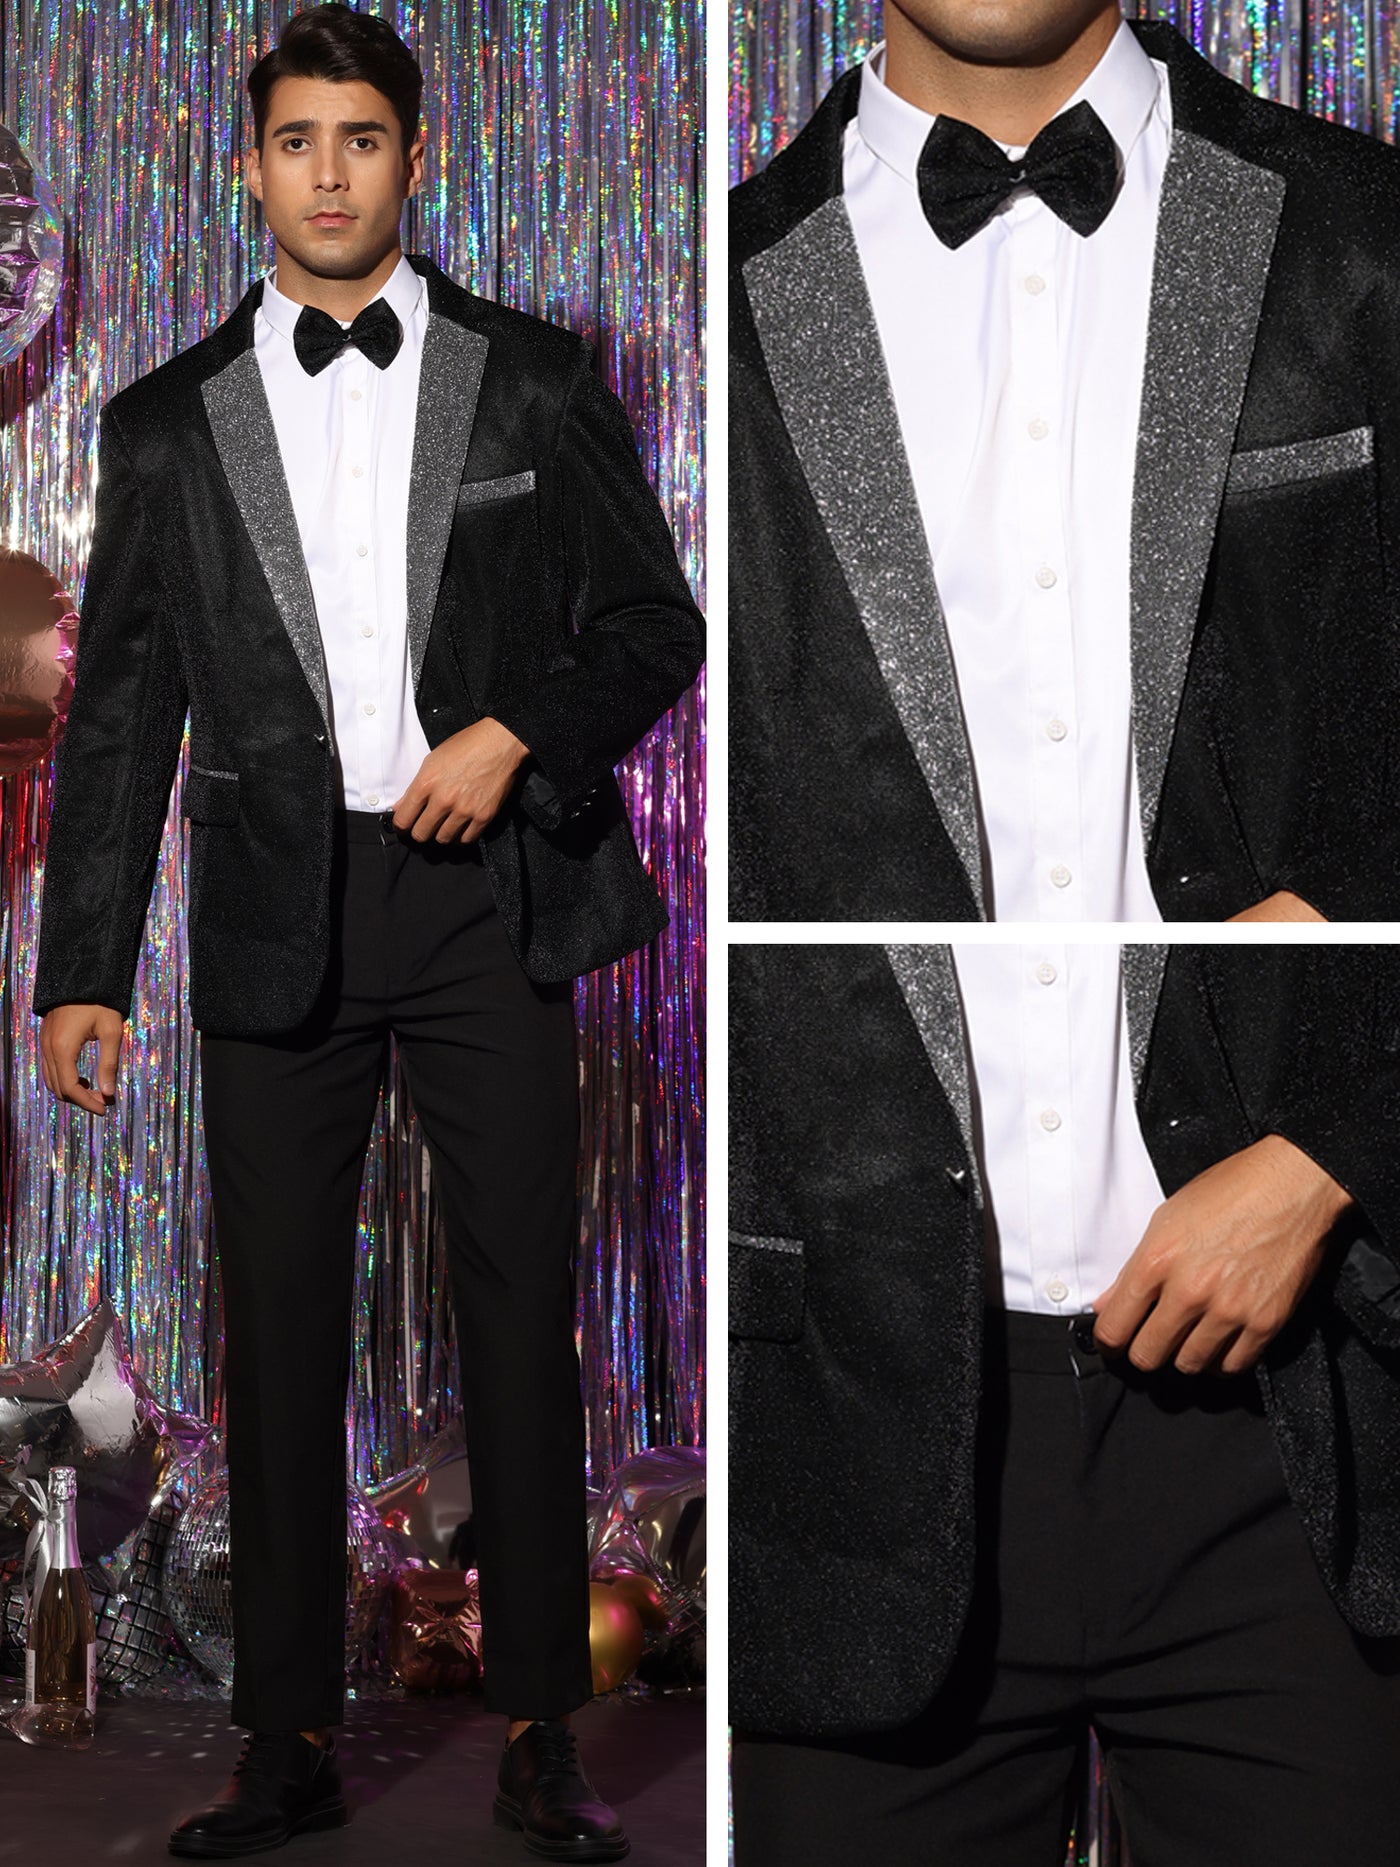 Bublédon Sparkle Blazer with Bow-tie for Men's Notch Lapel Prom Party Sport Coats